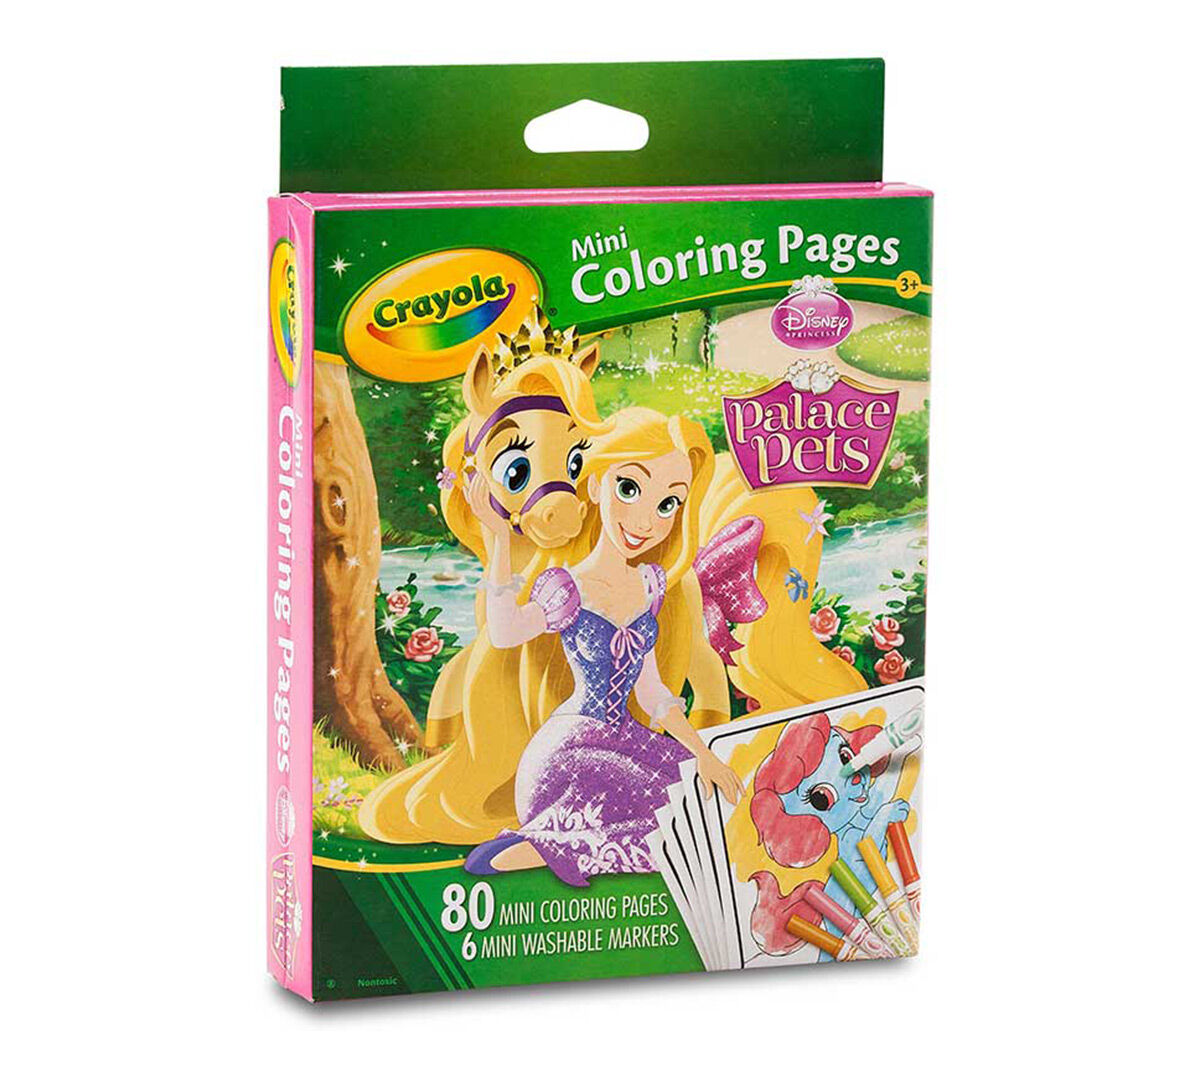 Mini Coloring Pages Disney Princess Palace Pets - Crayola